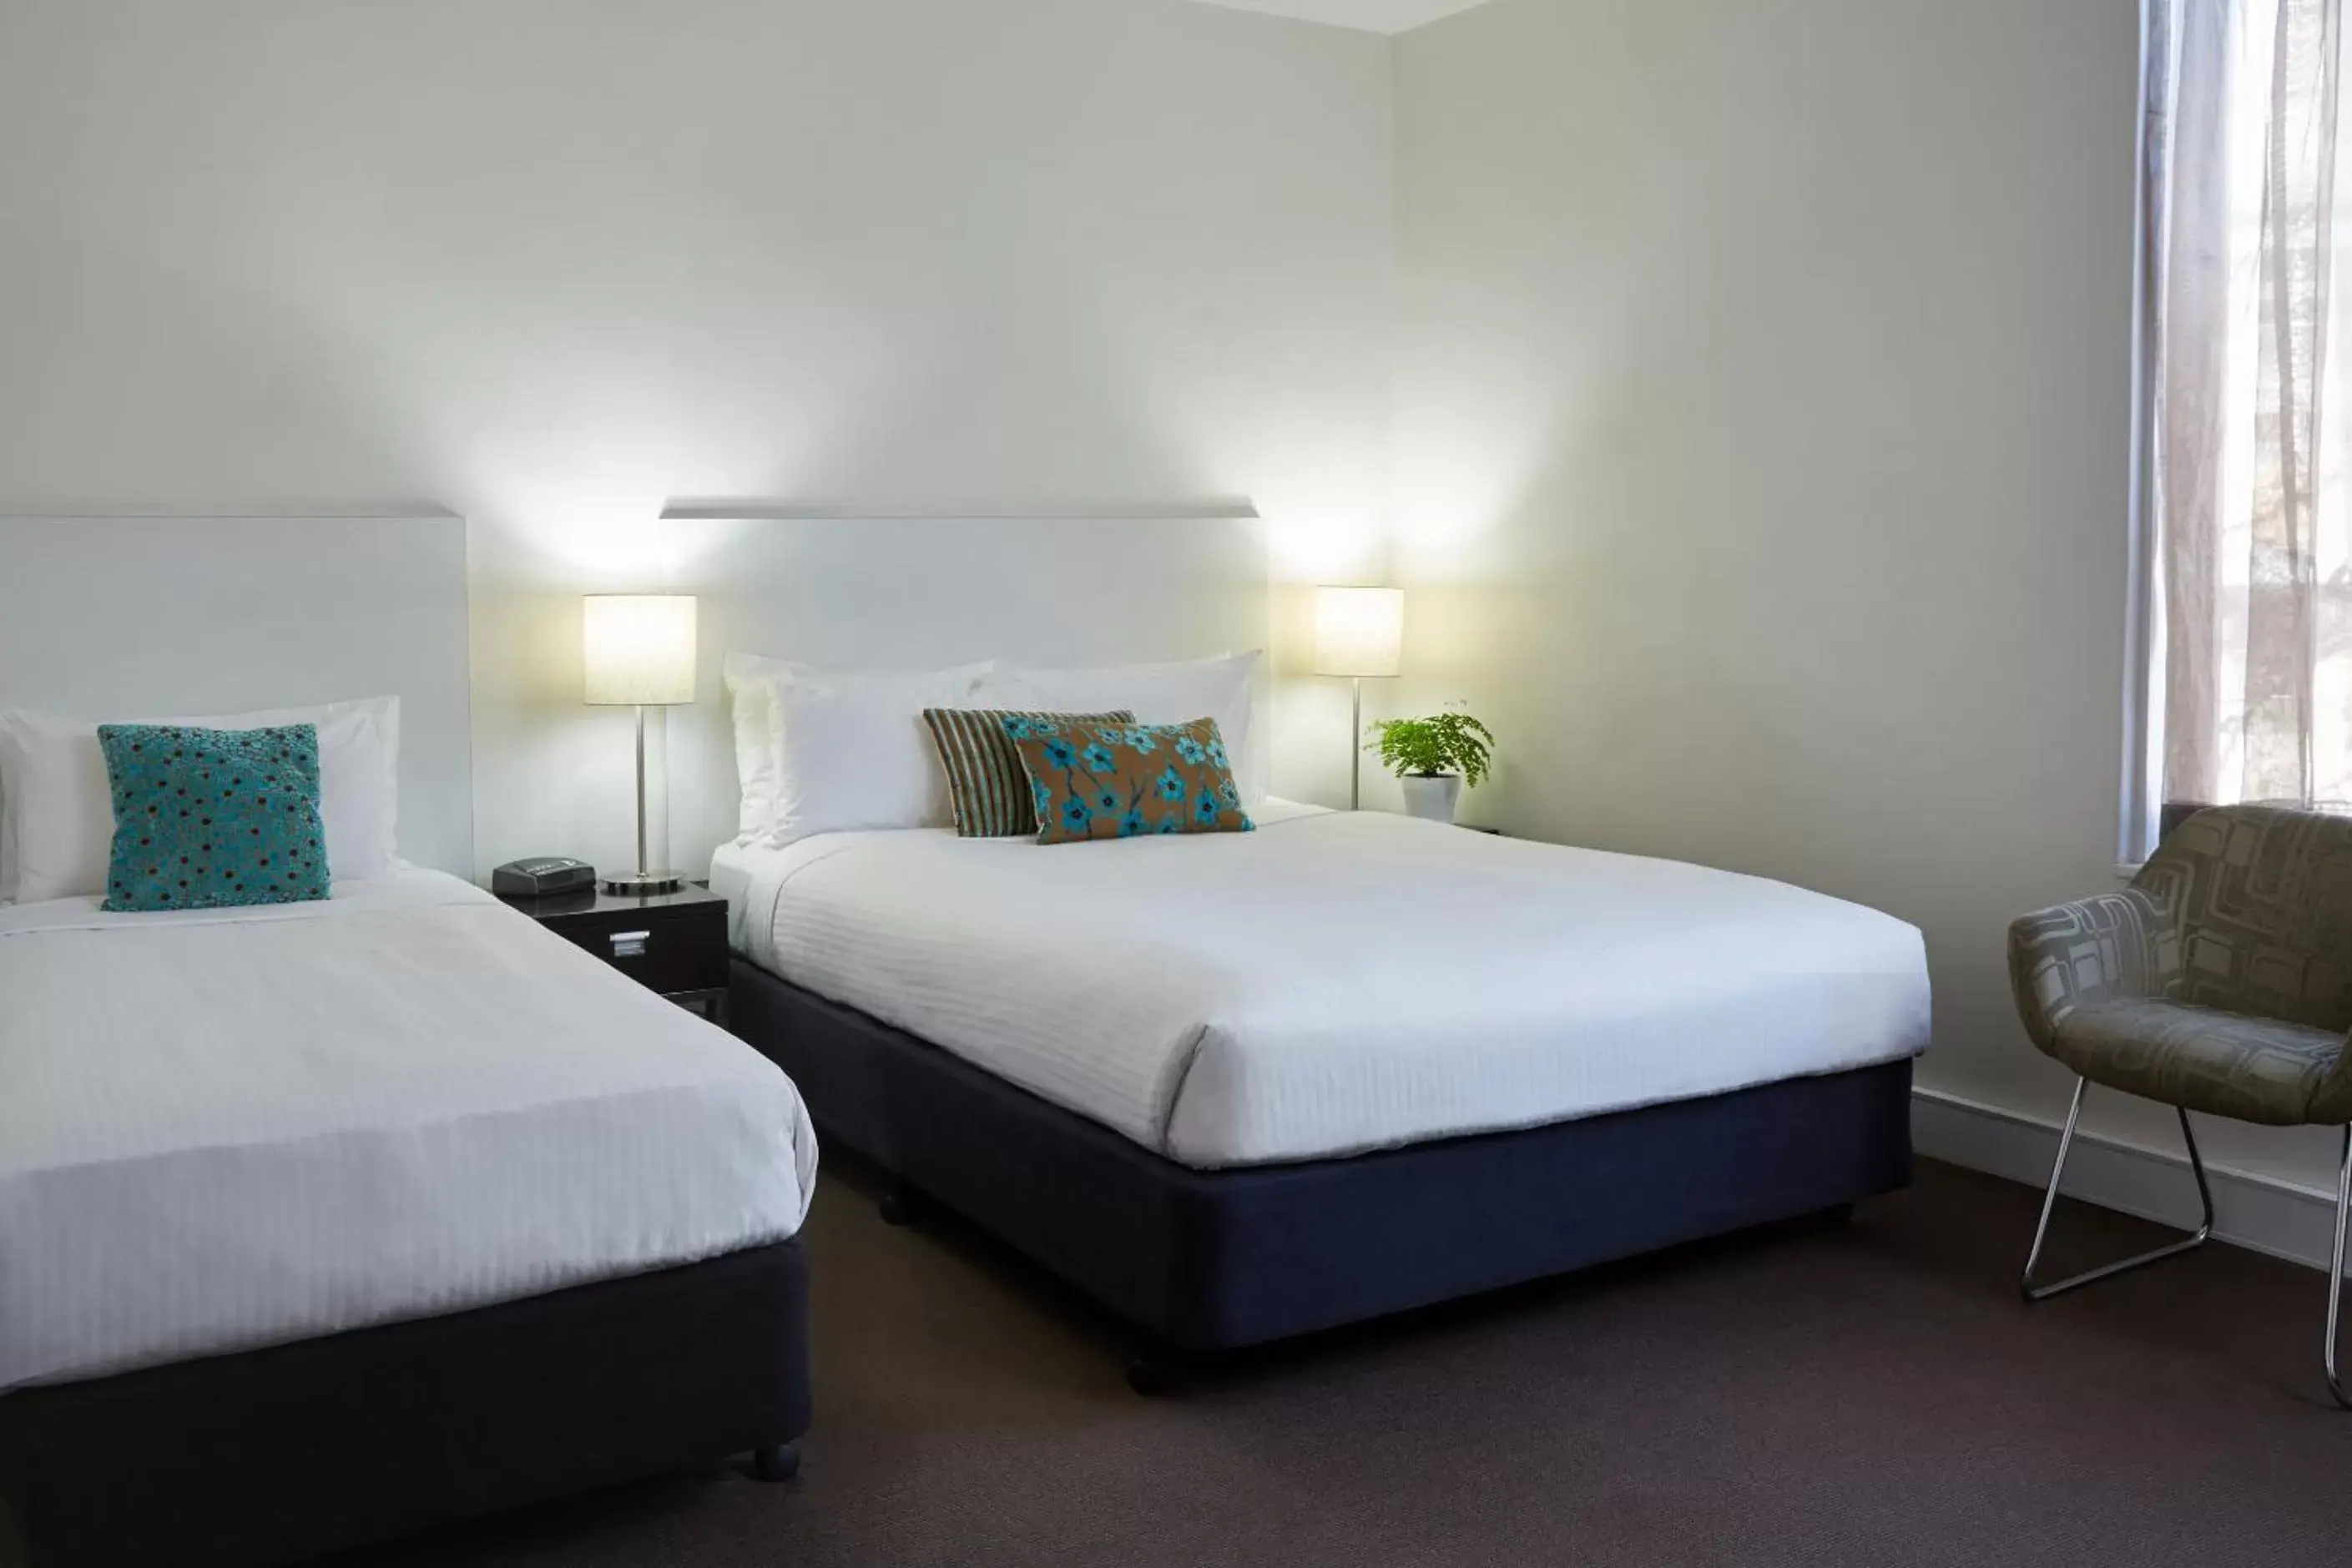 Bed, Room Photo in Cosmopolitan Hotel Melbourne